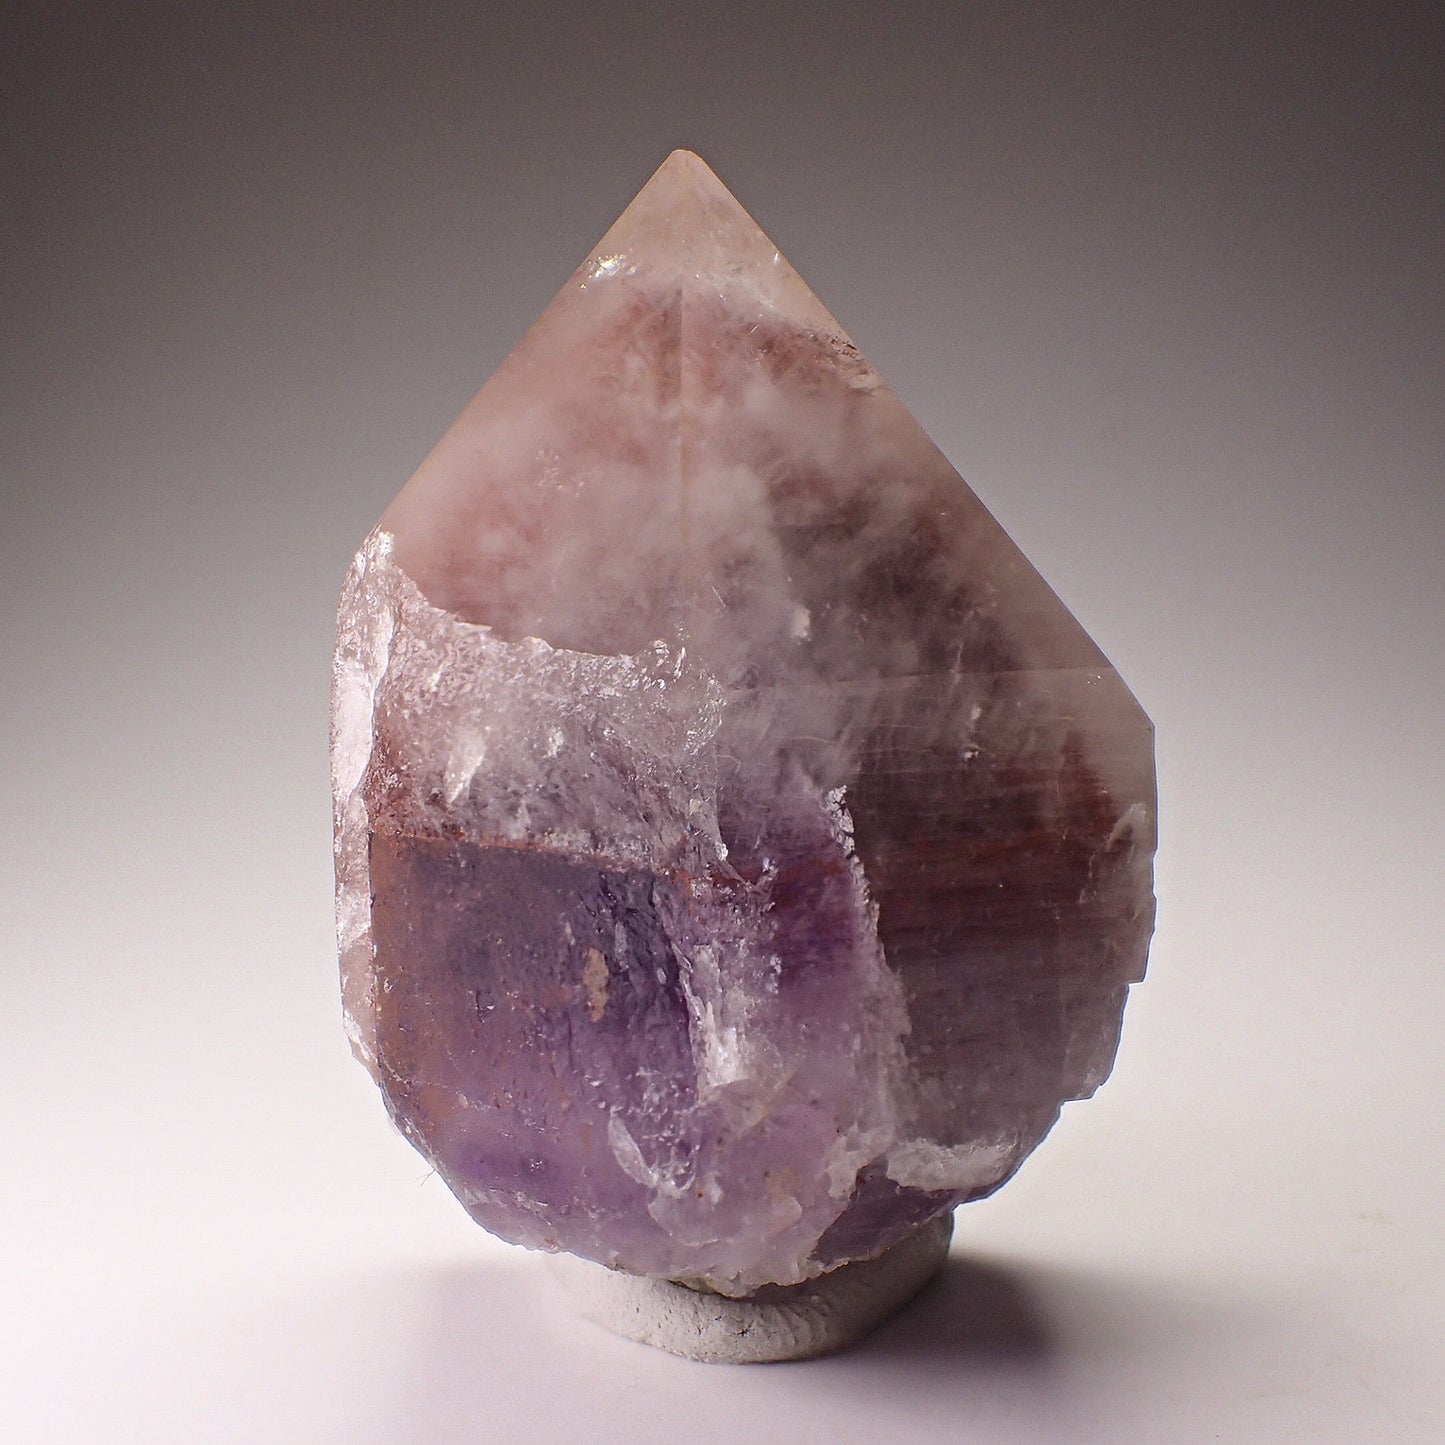 Amethyst & Hematite Phantom Orange River Quartz Crystal, Northern Cape, South Africa